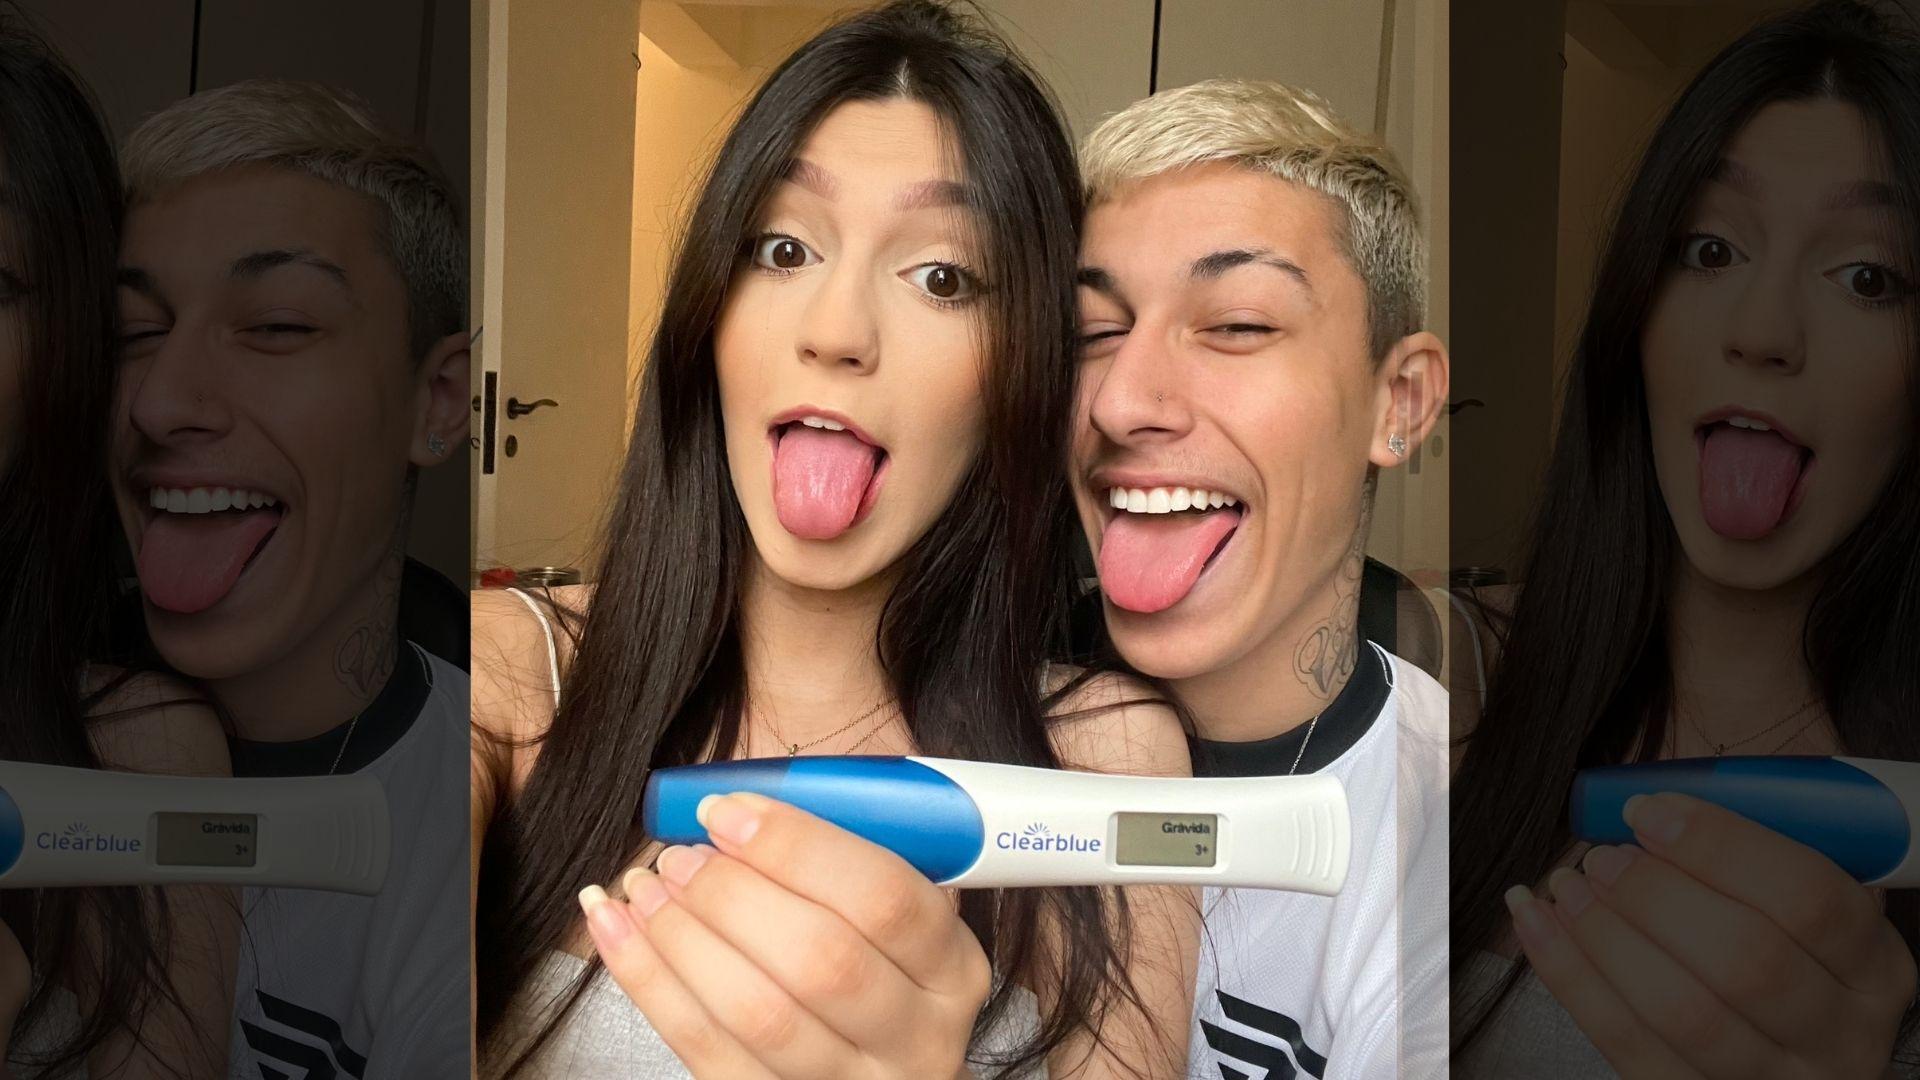 Kauelok mostra foto de teste de gravidez com Isa Fonti: “BabyLokFonti vem aí”